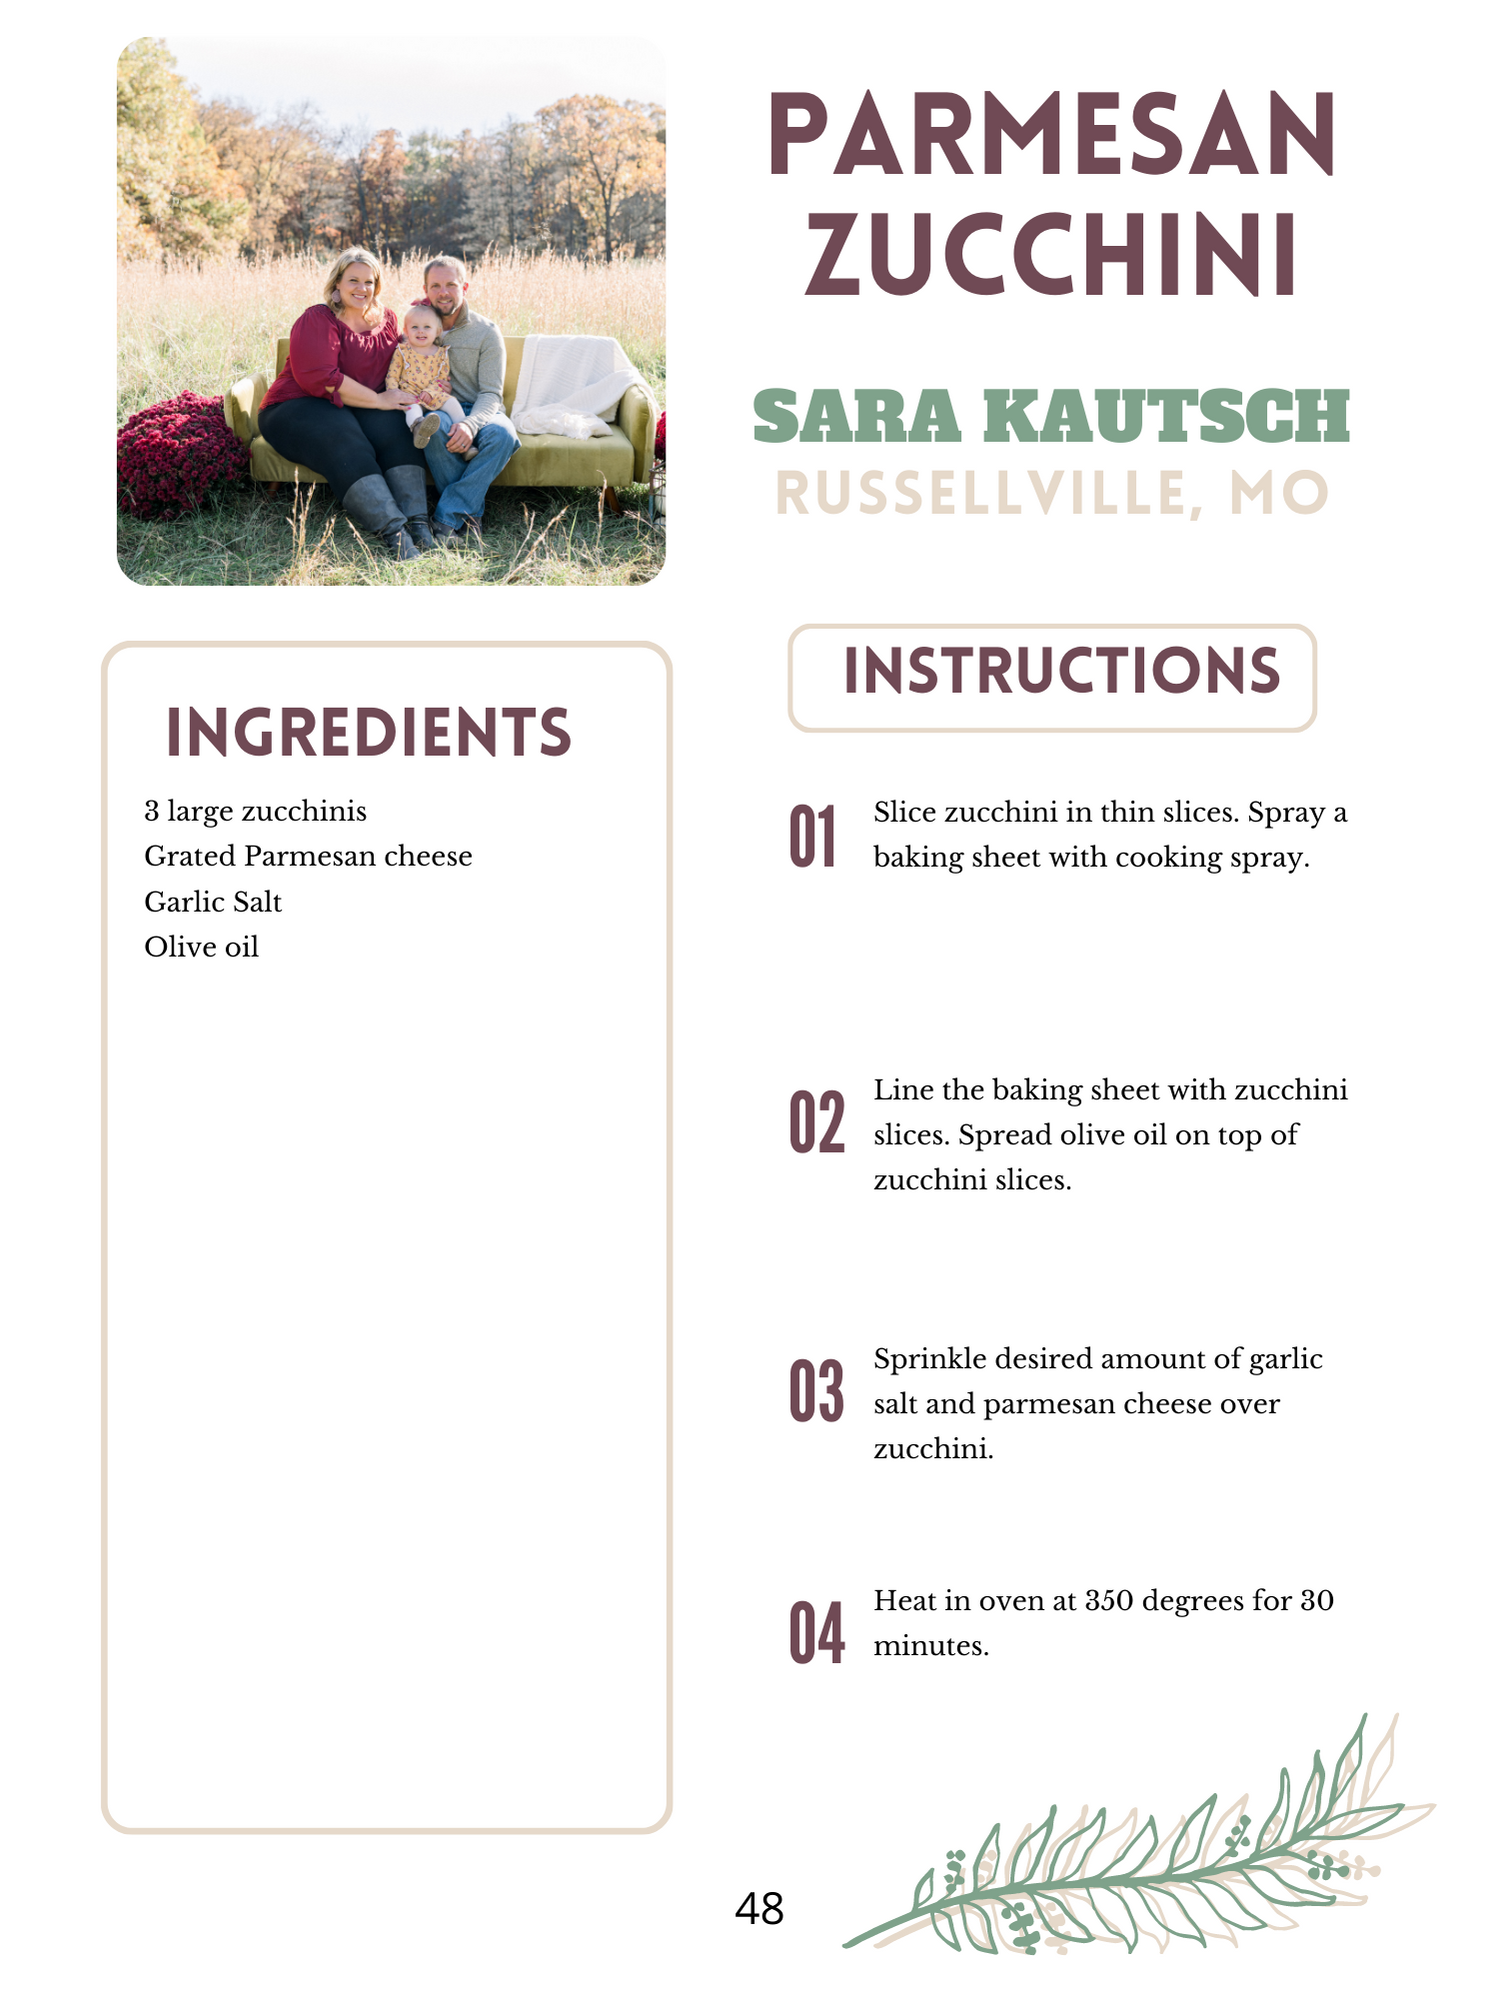 Complete Farm Wife Cookbook sample parmesan zucchini recipe